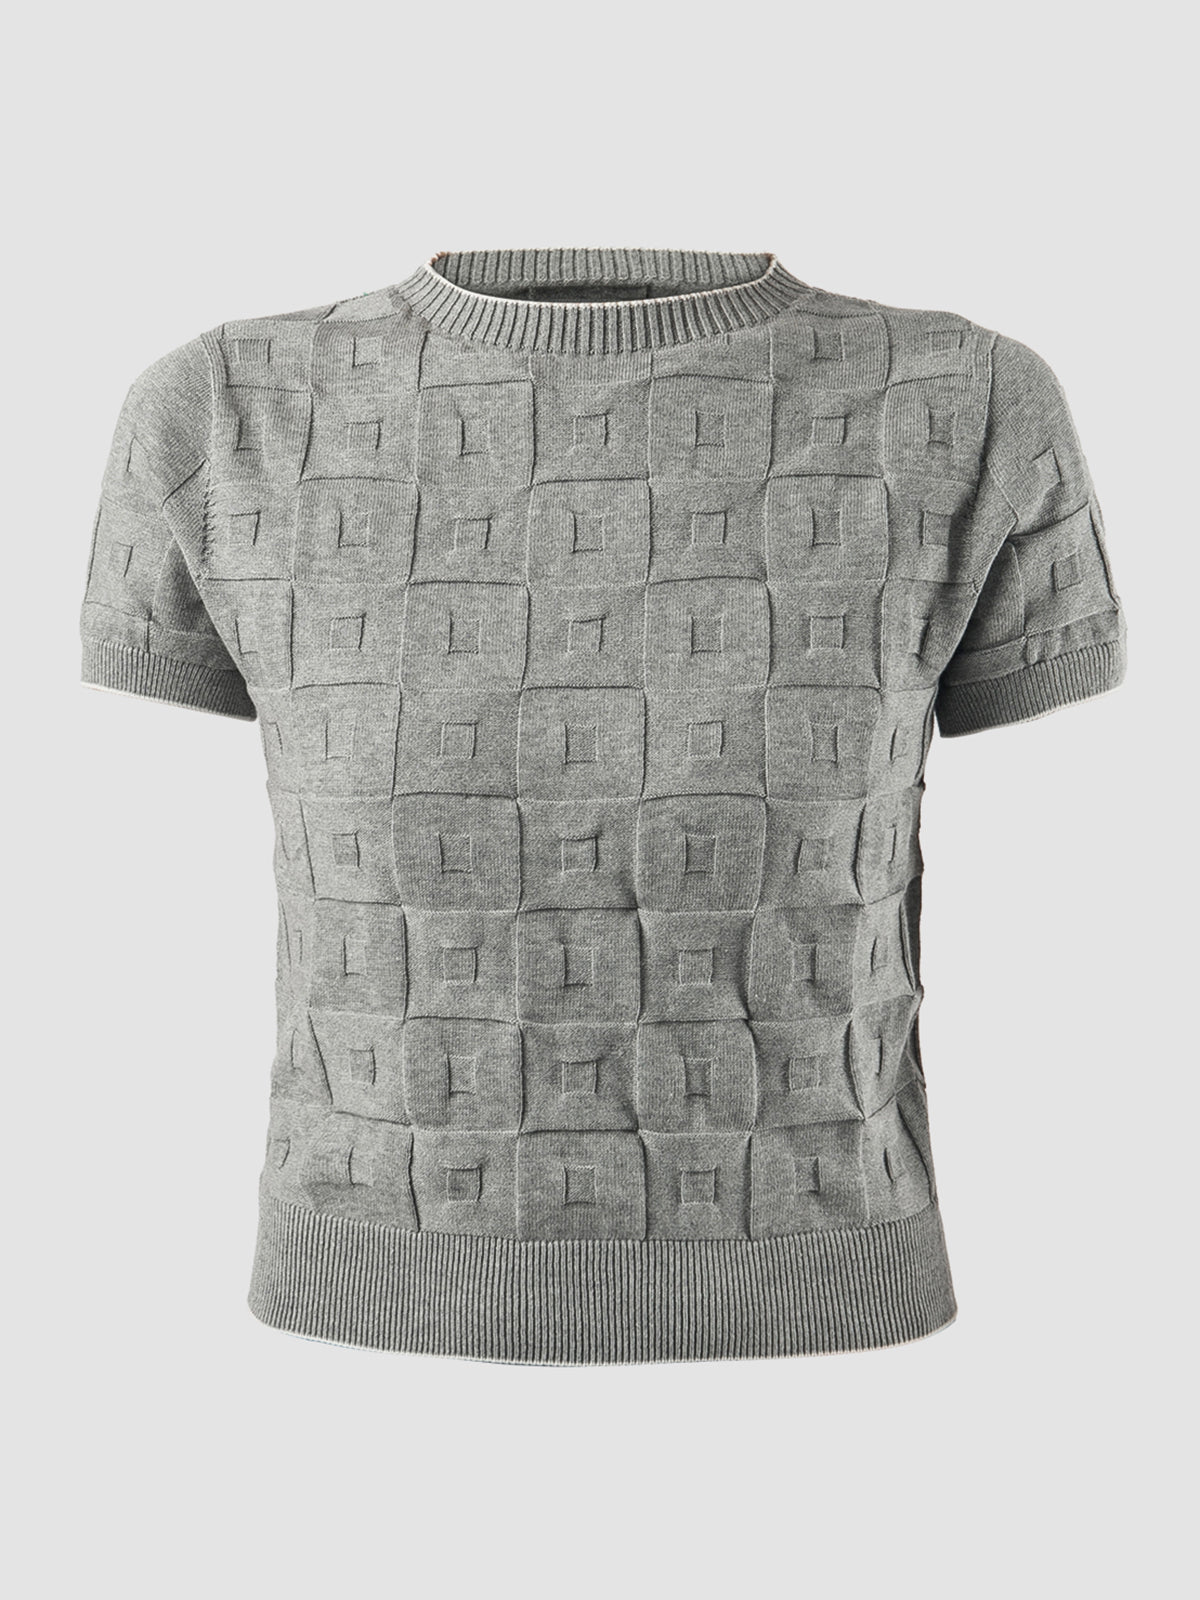 Prim grey short-sleeved knit top